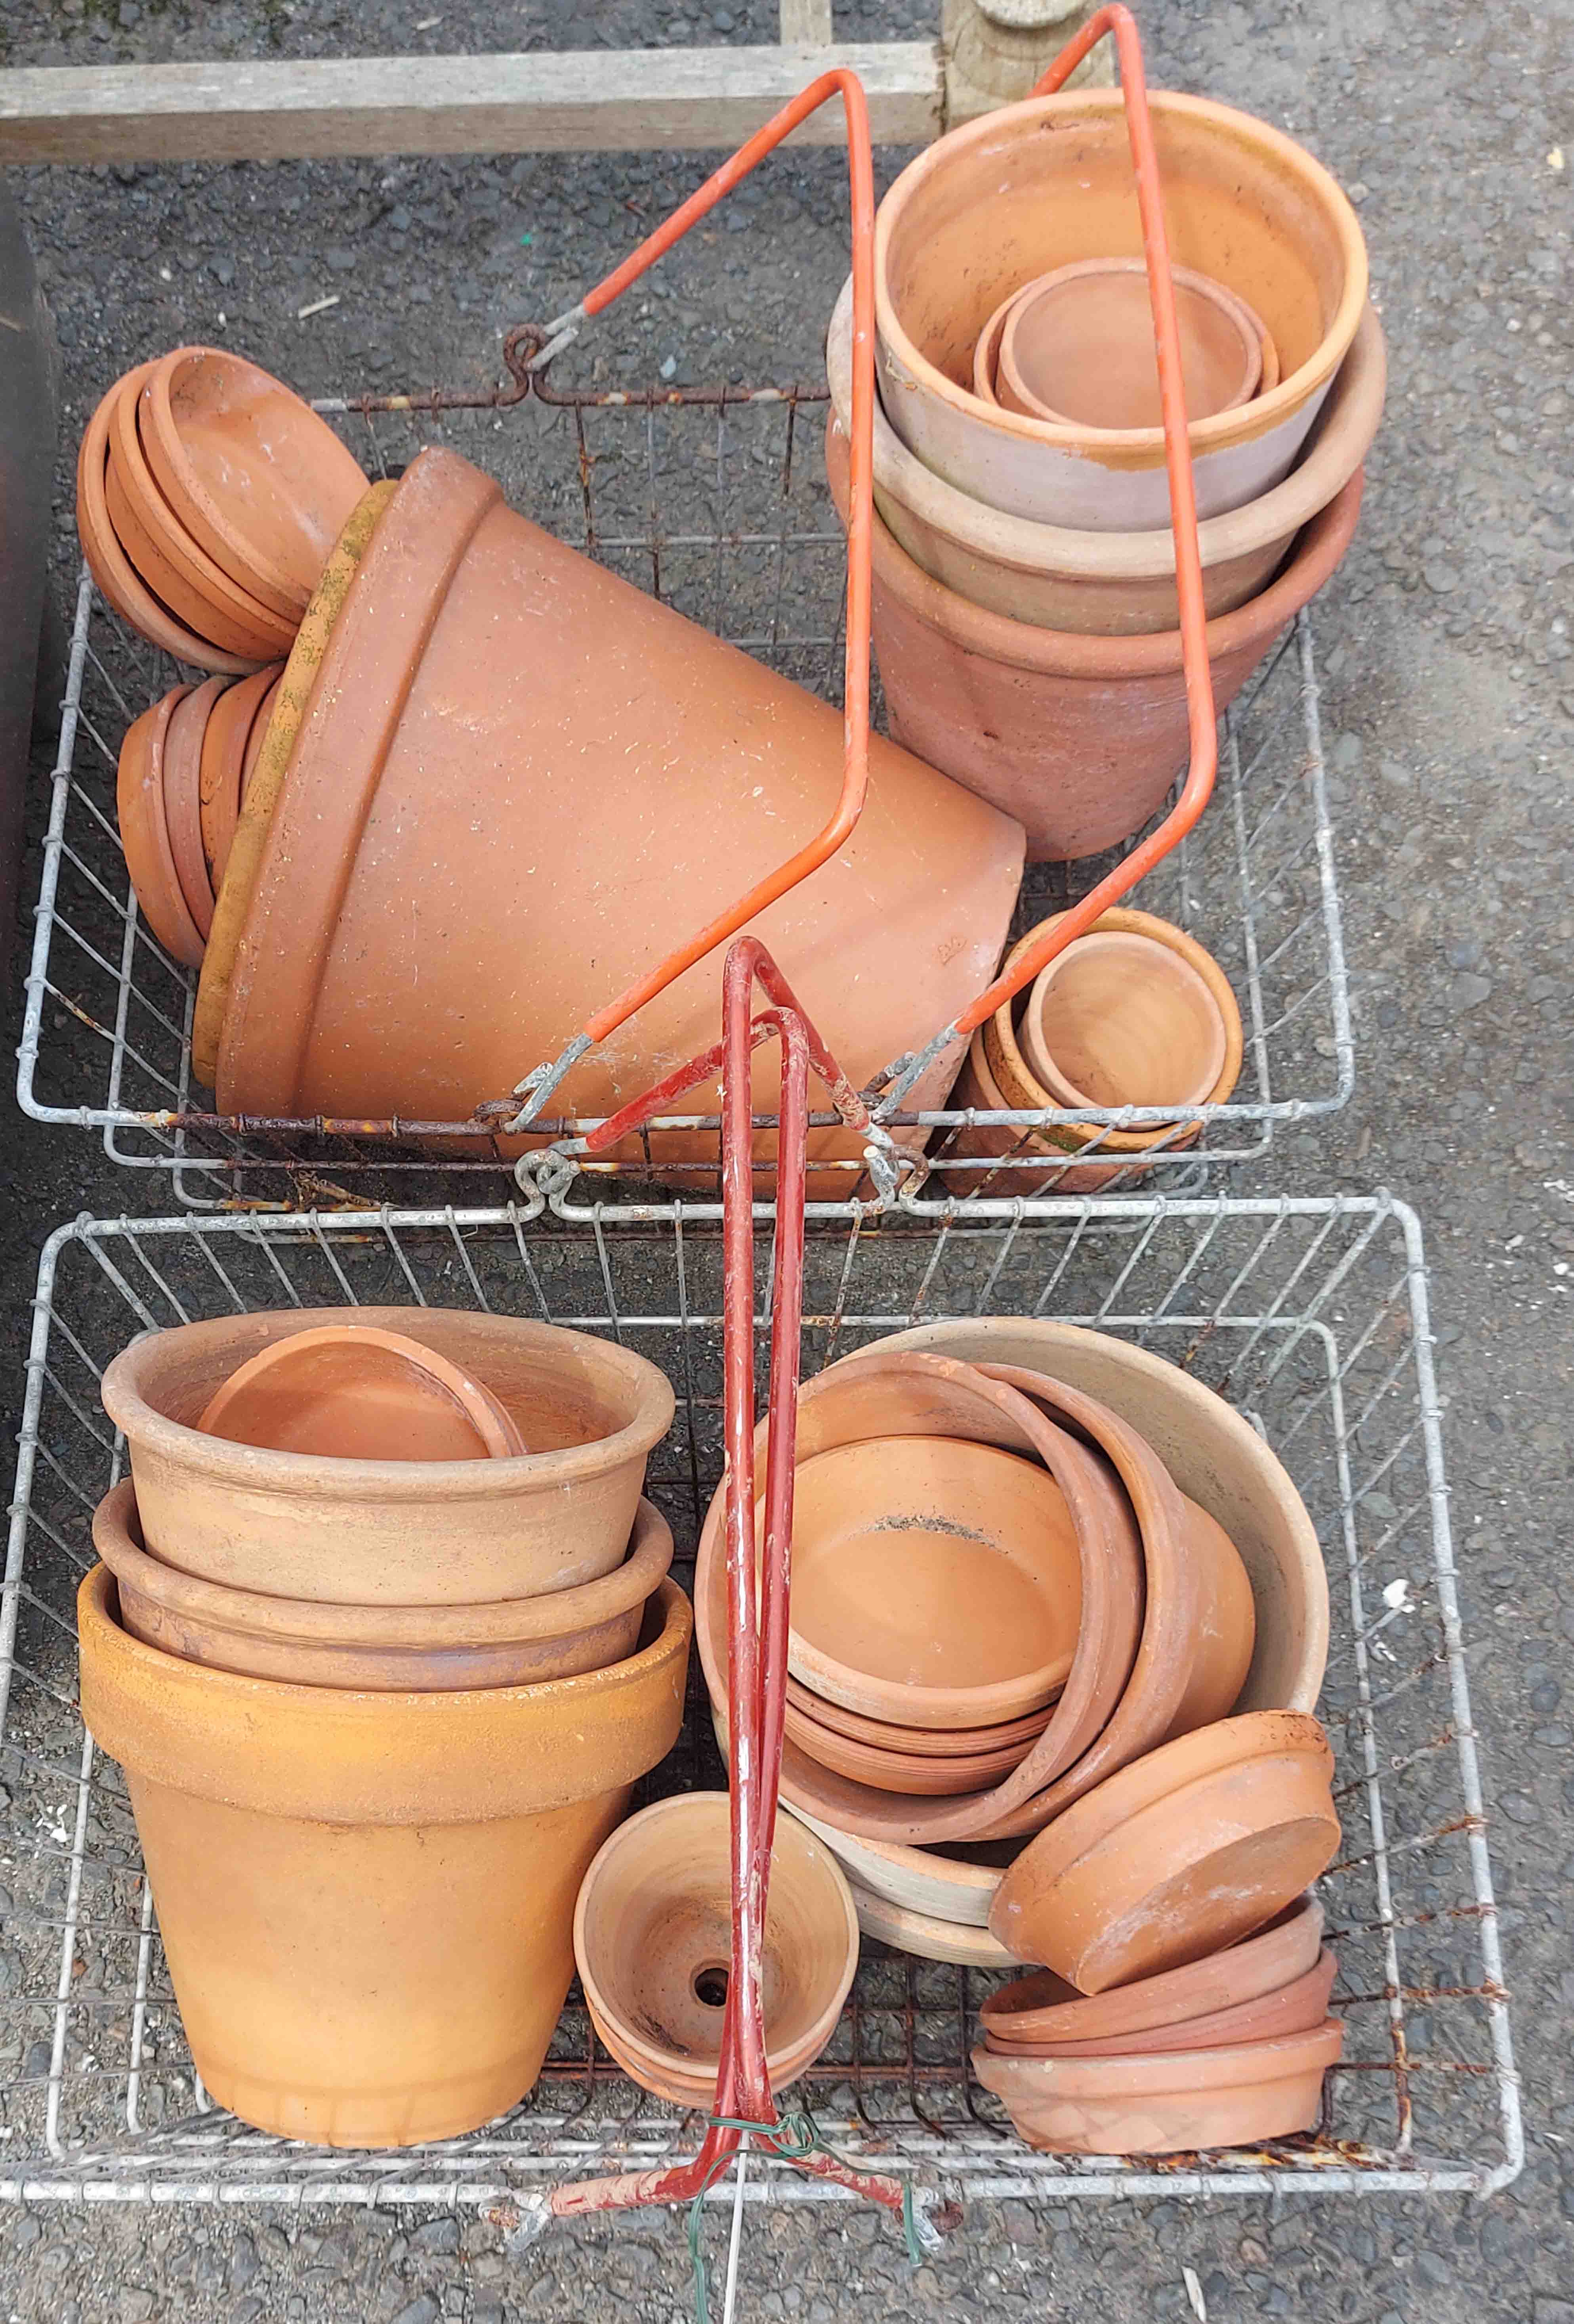 Two baskets of terracotta pots